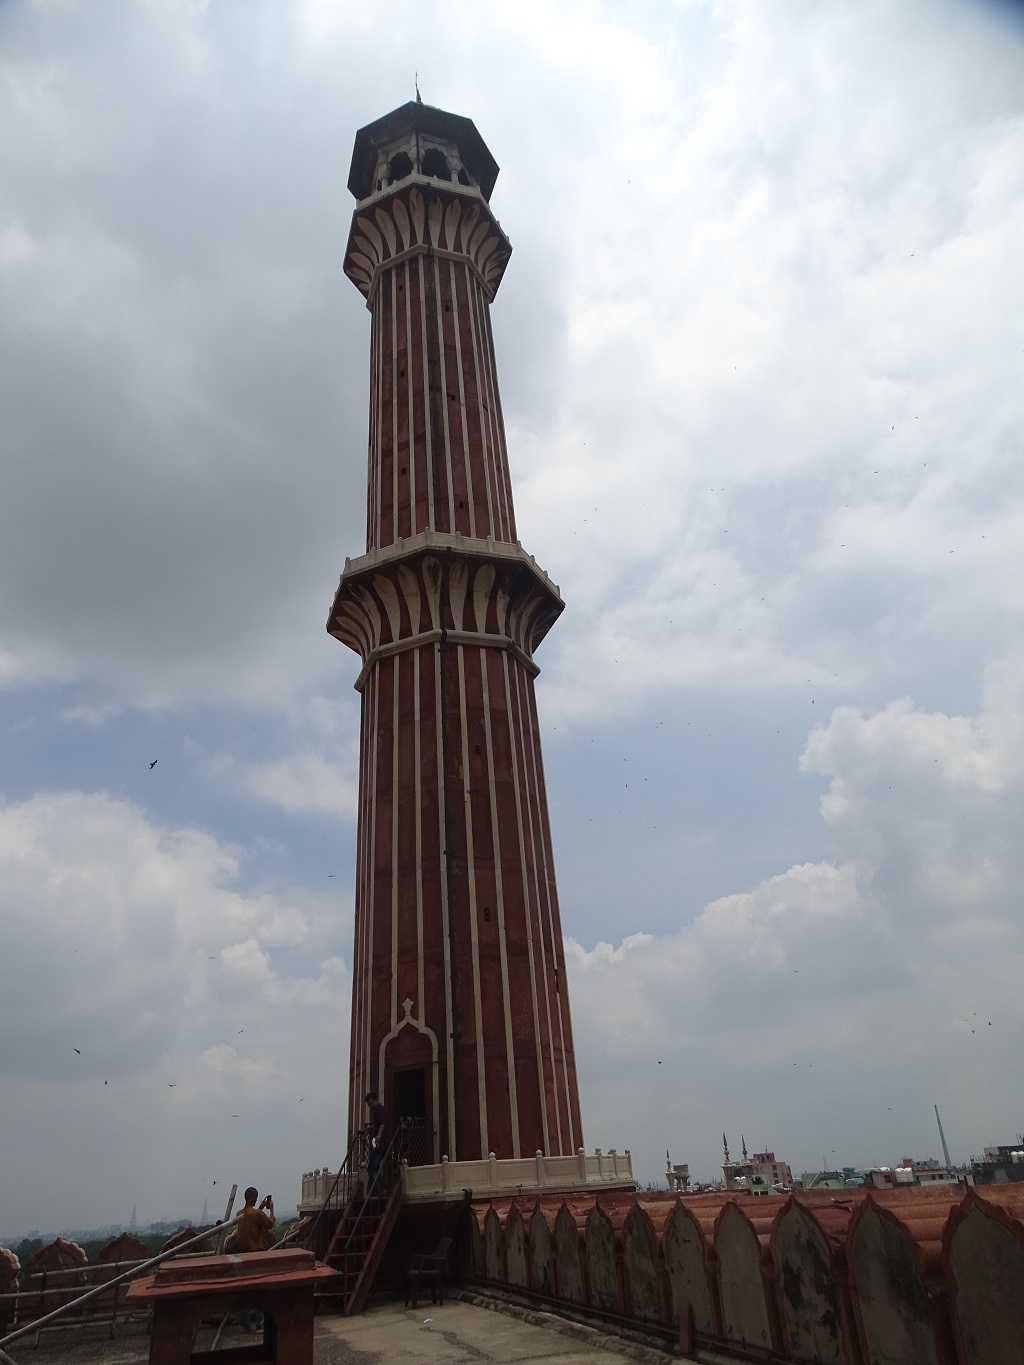 Minar of Shahi Jama Masjid – Climb Atop for a Bird’s Eye View of the City